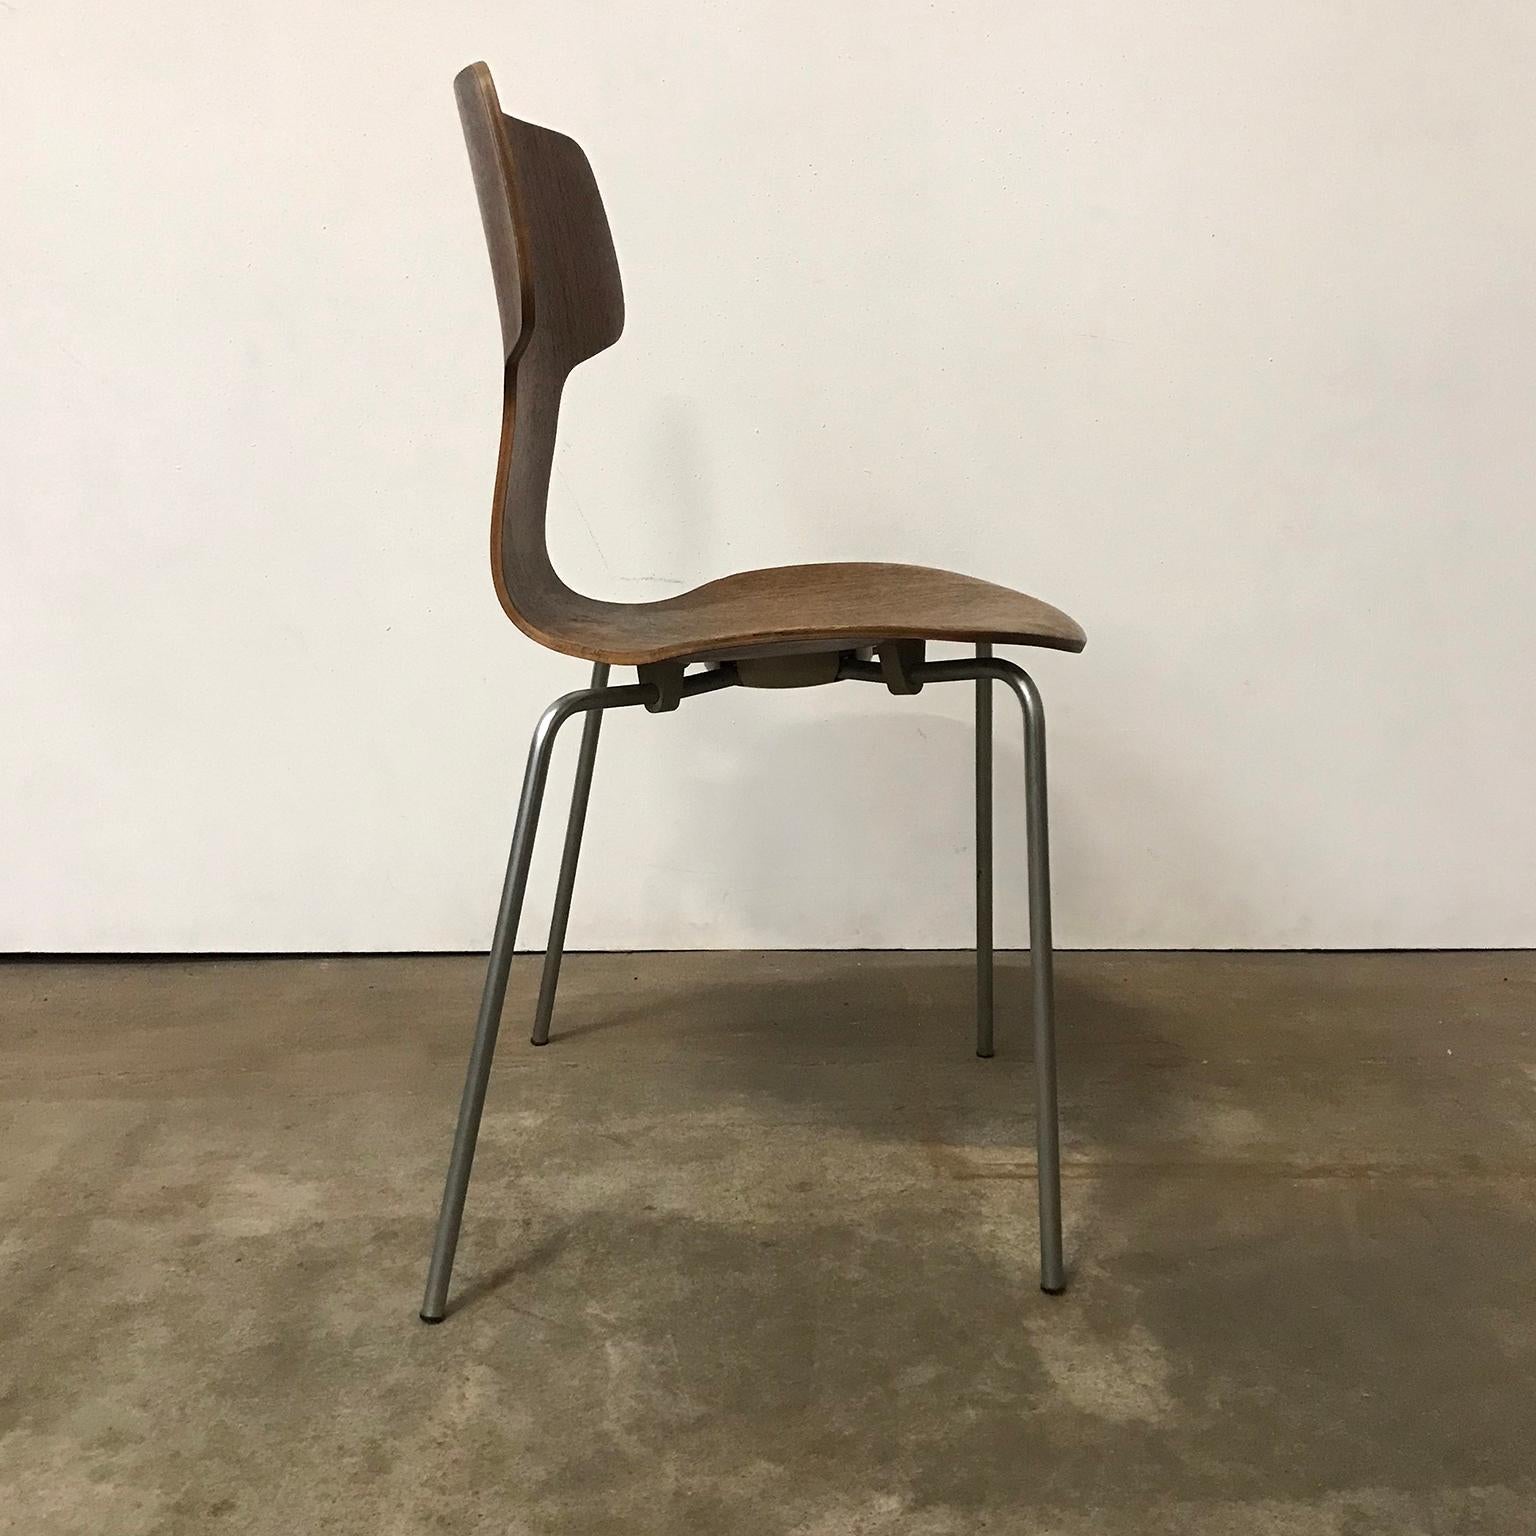 Danish 1955, Arne Jacobsen for Fritz Hansen, Original, Rare, Chair 3103 with Grey Base For Sale